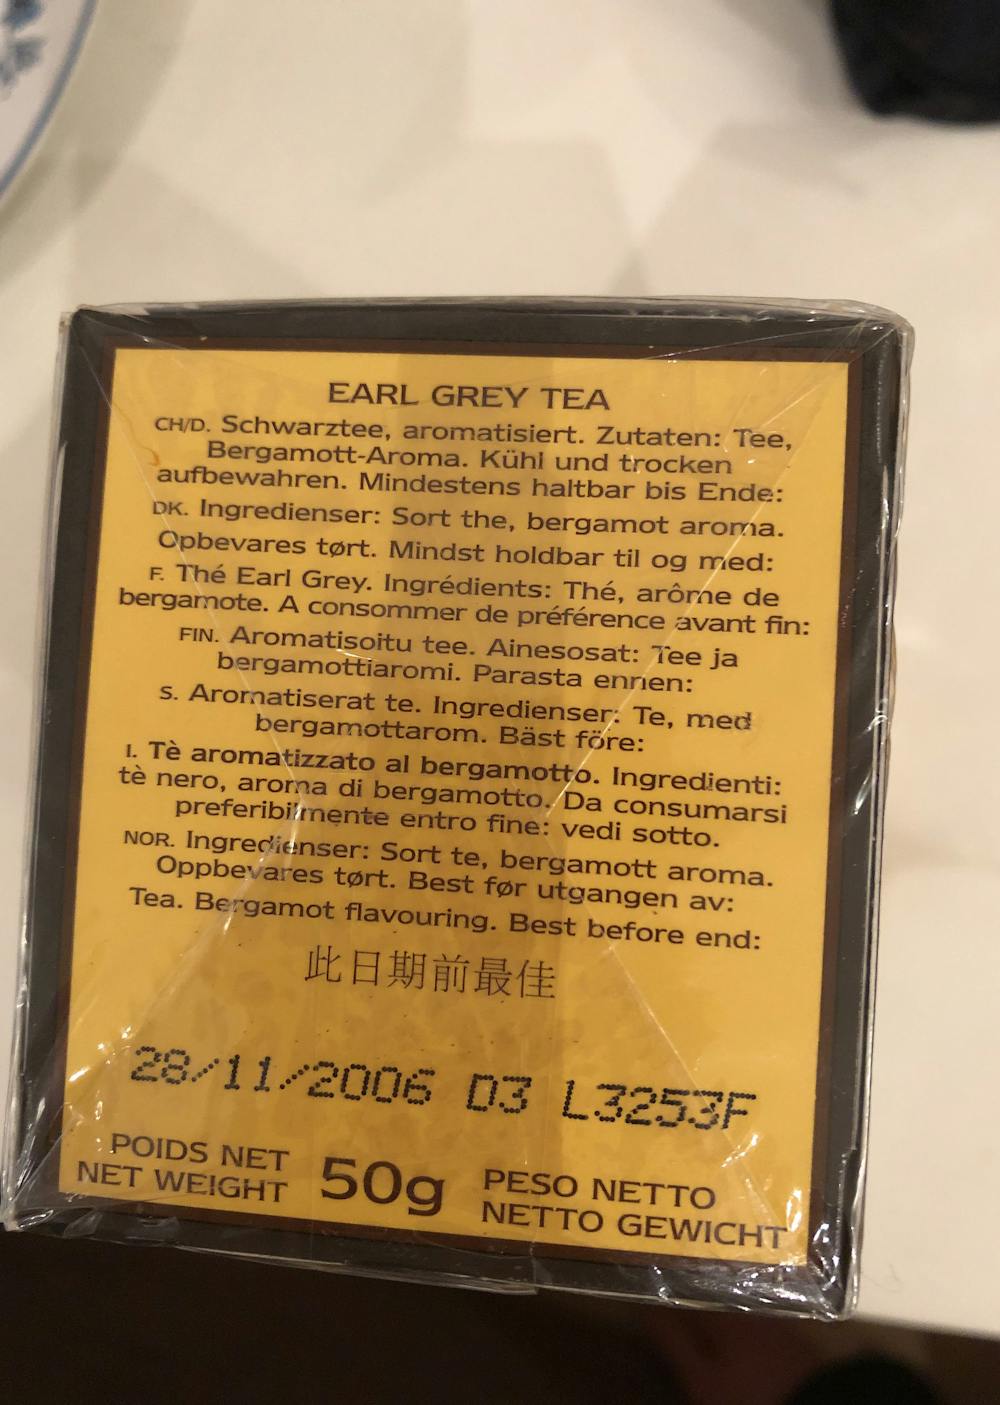 Ingredienslisten til Twinings Earl grey tea